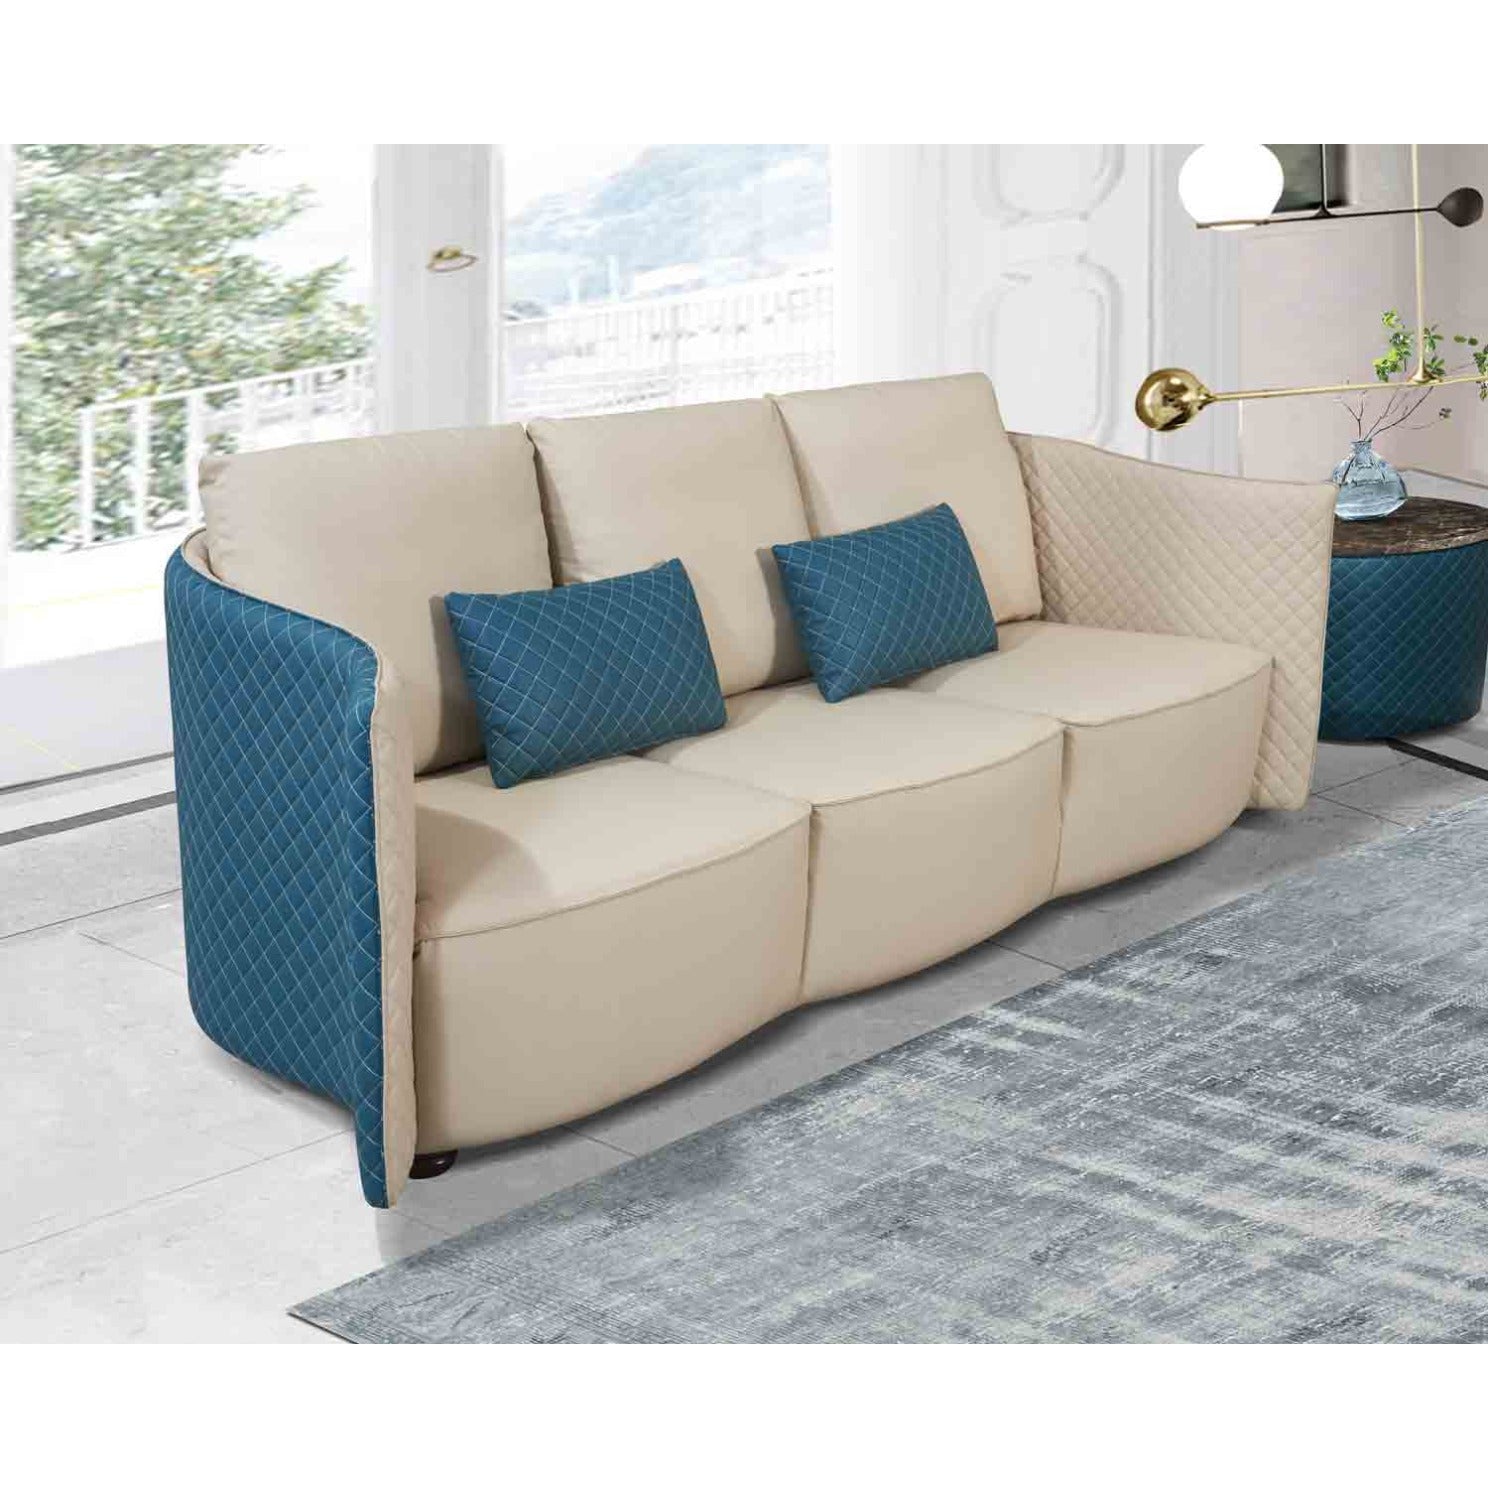 European Furniture - Makassar 2 Piece Living Room Set in Sand Beige & Blue - 52554-2SET - New Star Living